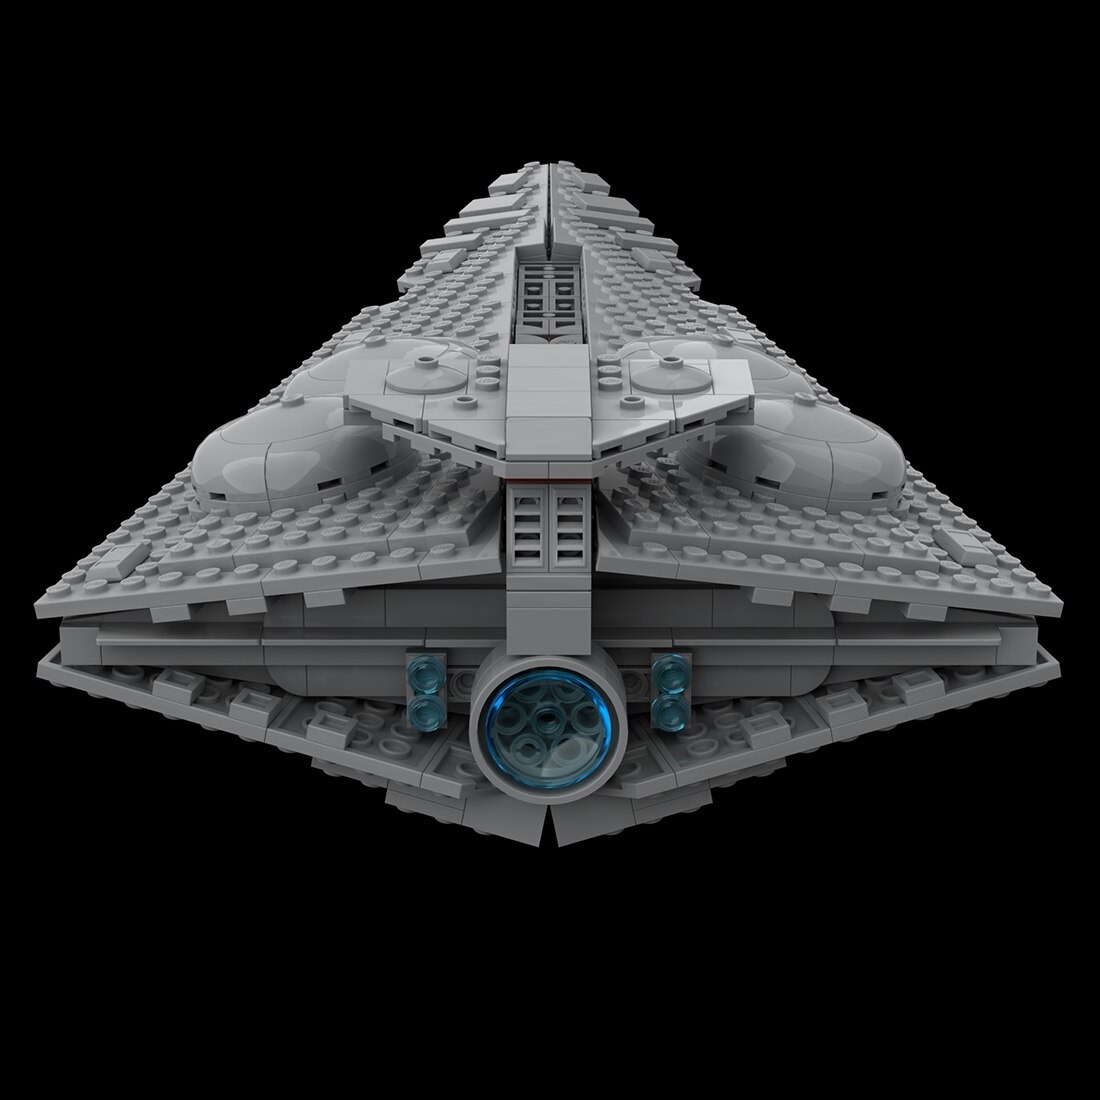 Star Wars MOC-108178 Interdictor-class Star Destroyer MOCBRICKLAND